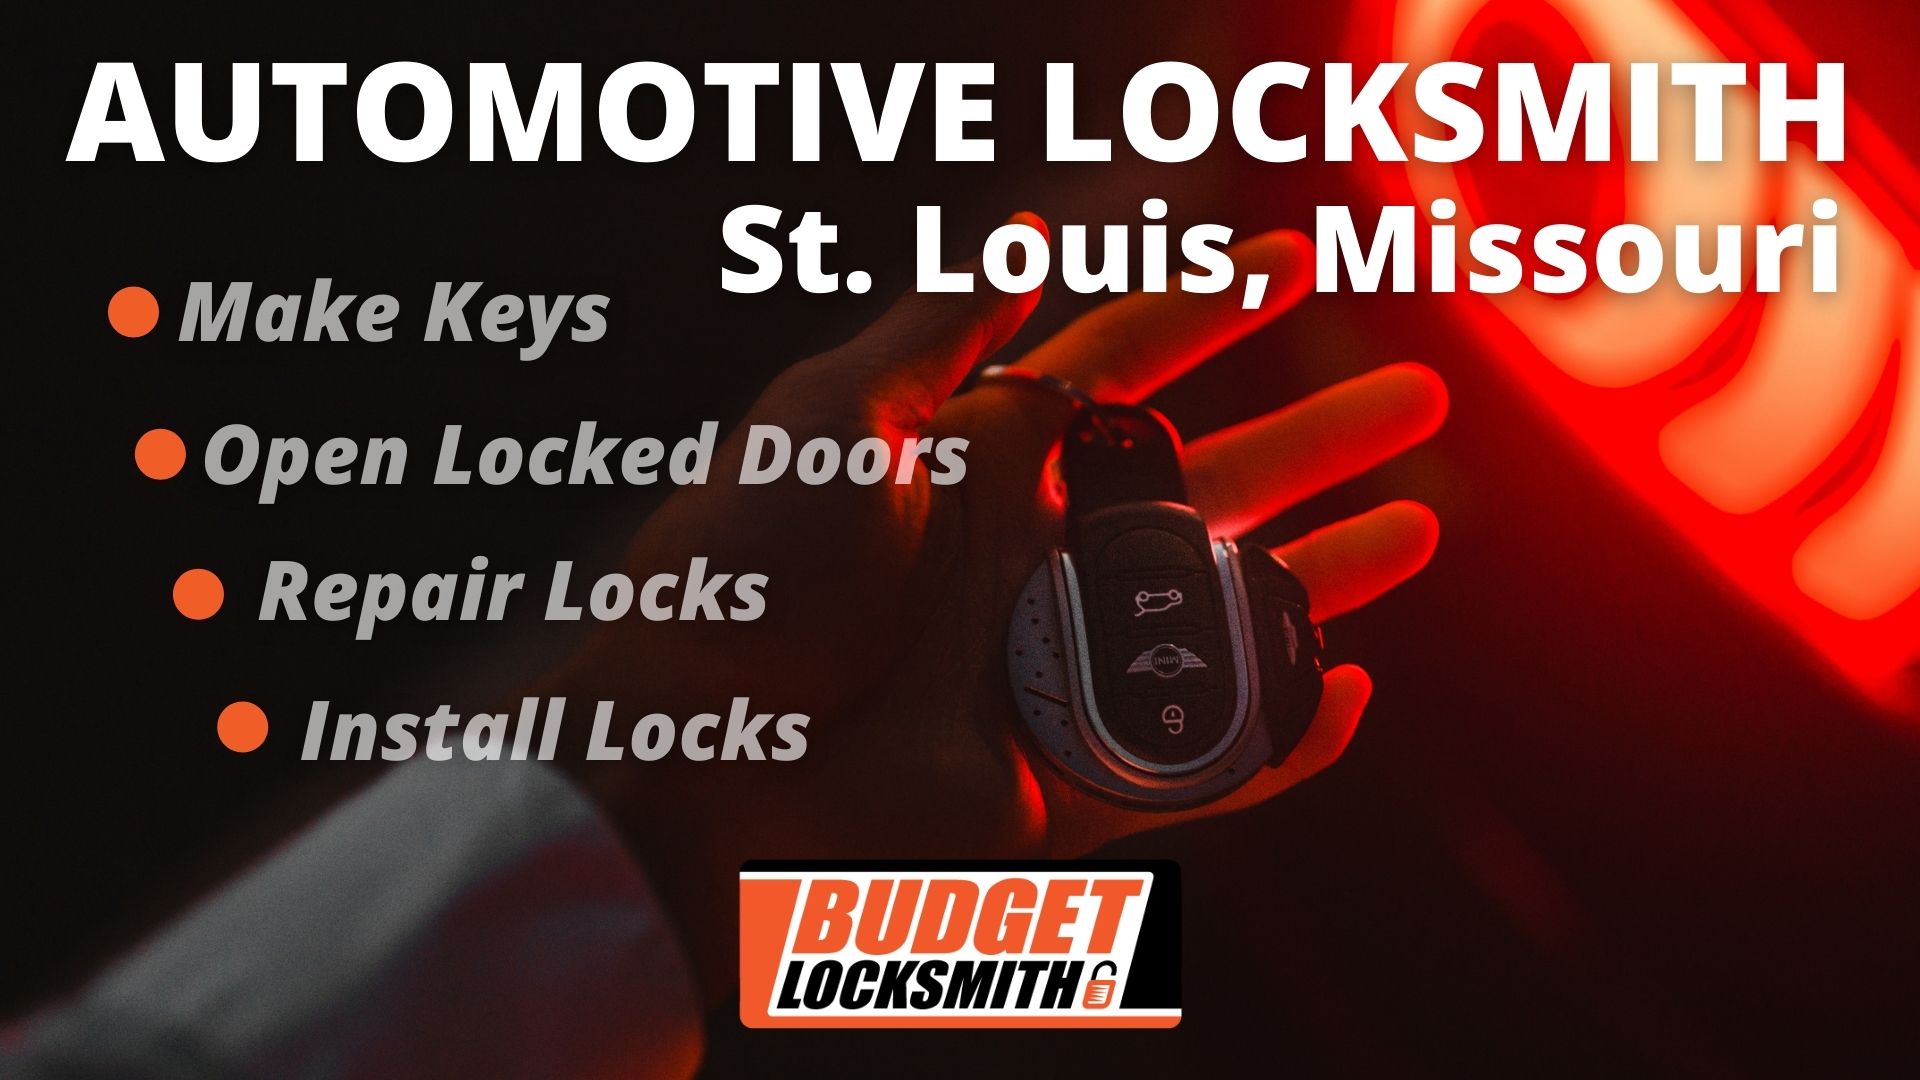 Budget Locksmith Automotive Locksmith of St Louis